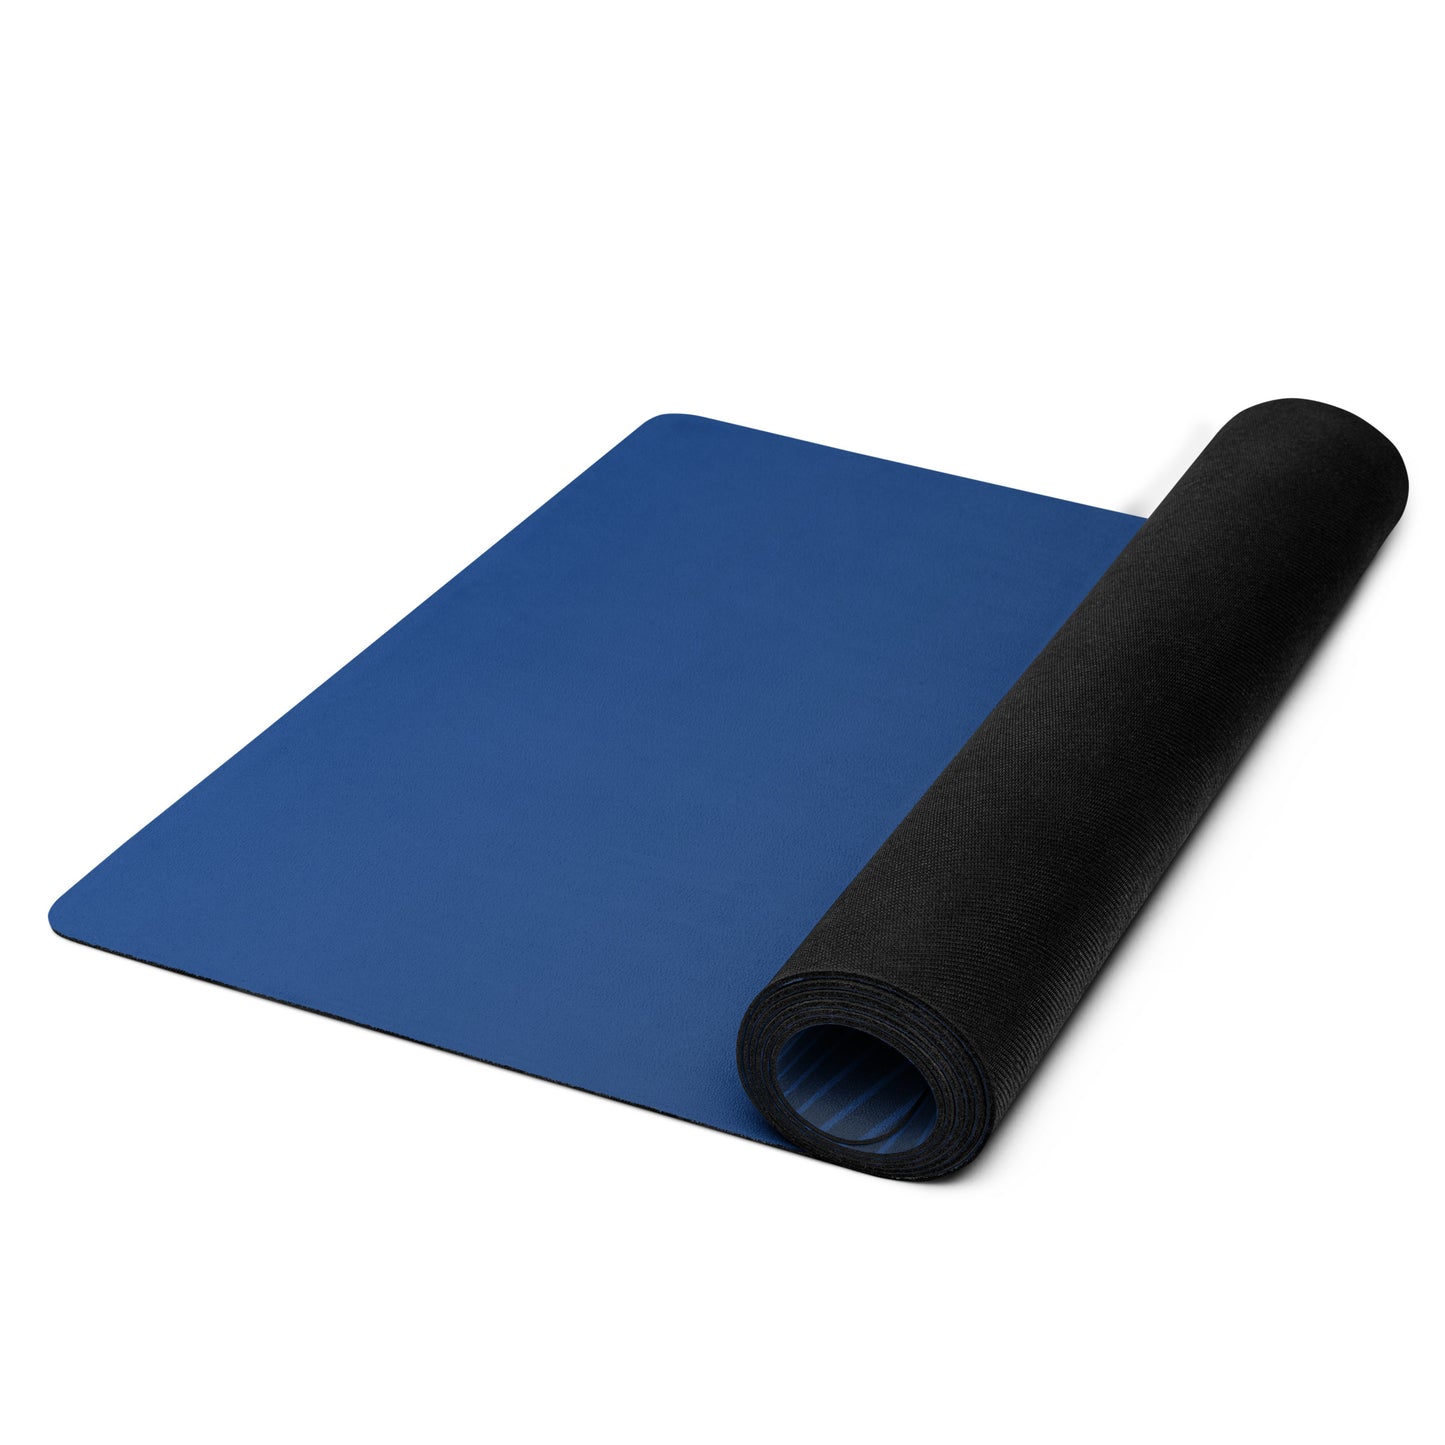 Classic Blue Natural Rubber Anti-slip Workout mat